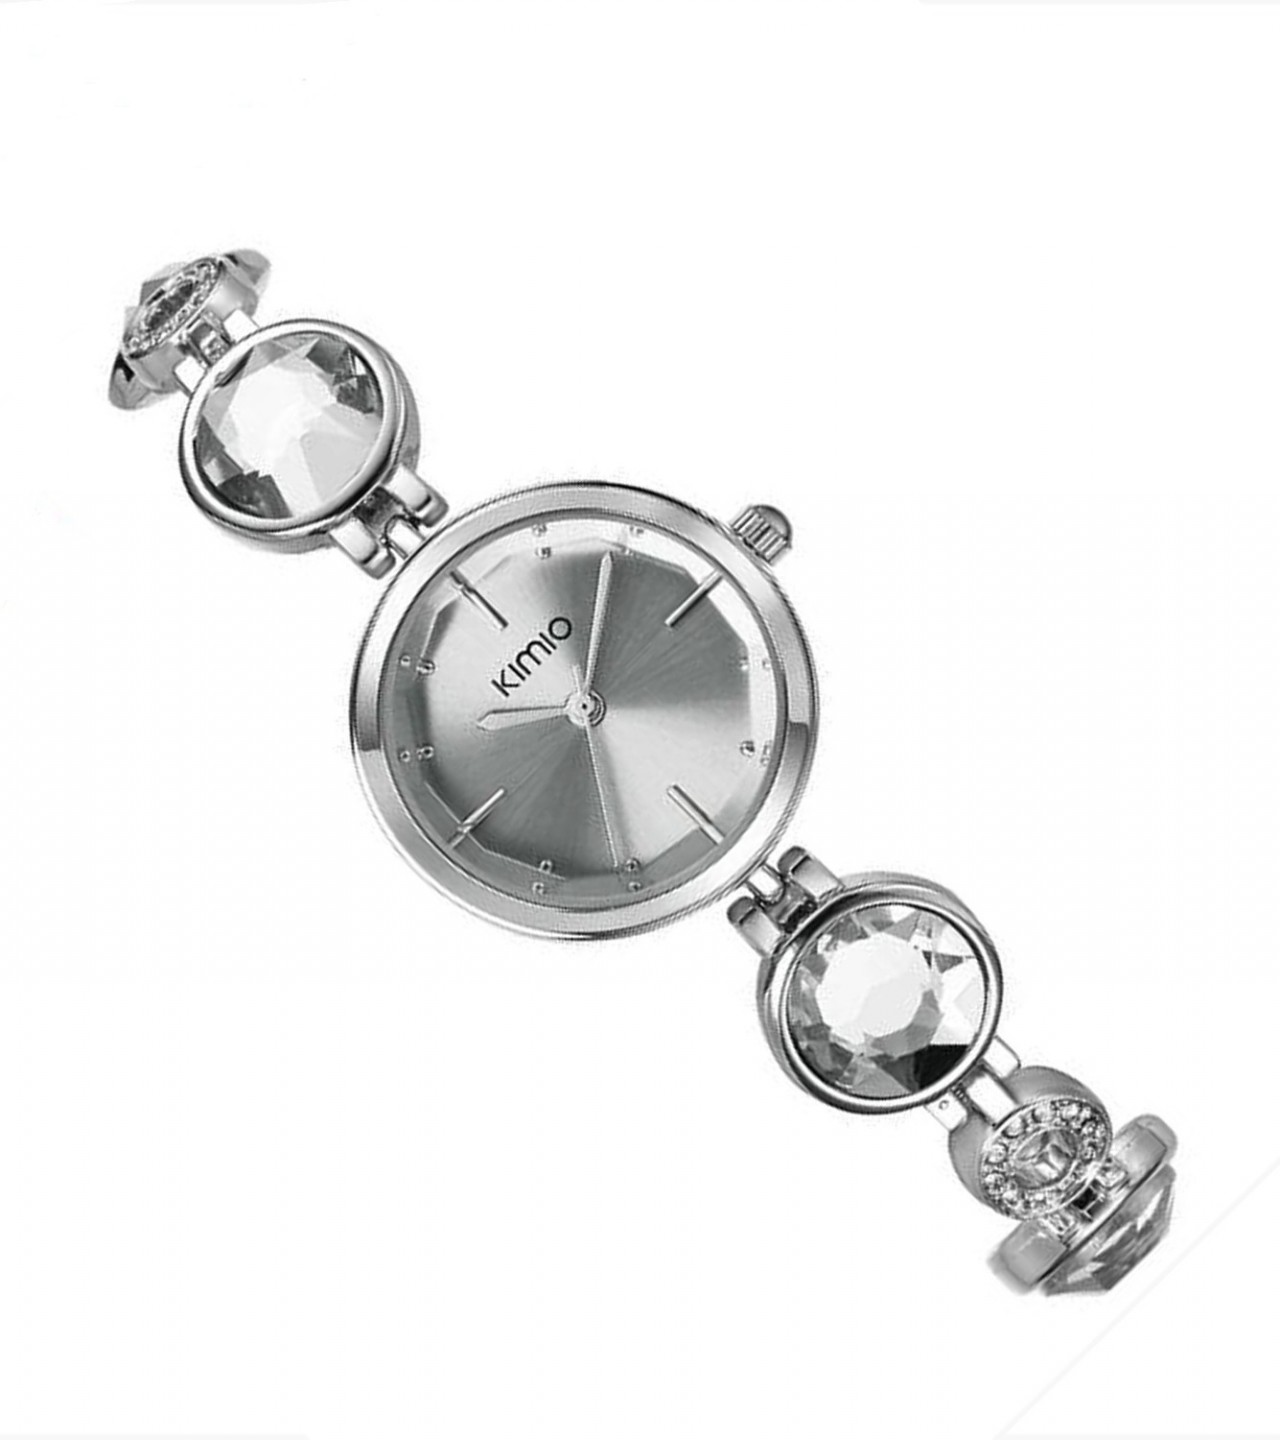 Fashion Crystal Stone Bracelet Watch For Women / Girls - White